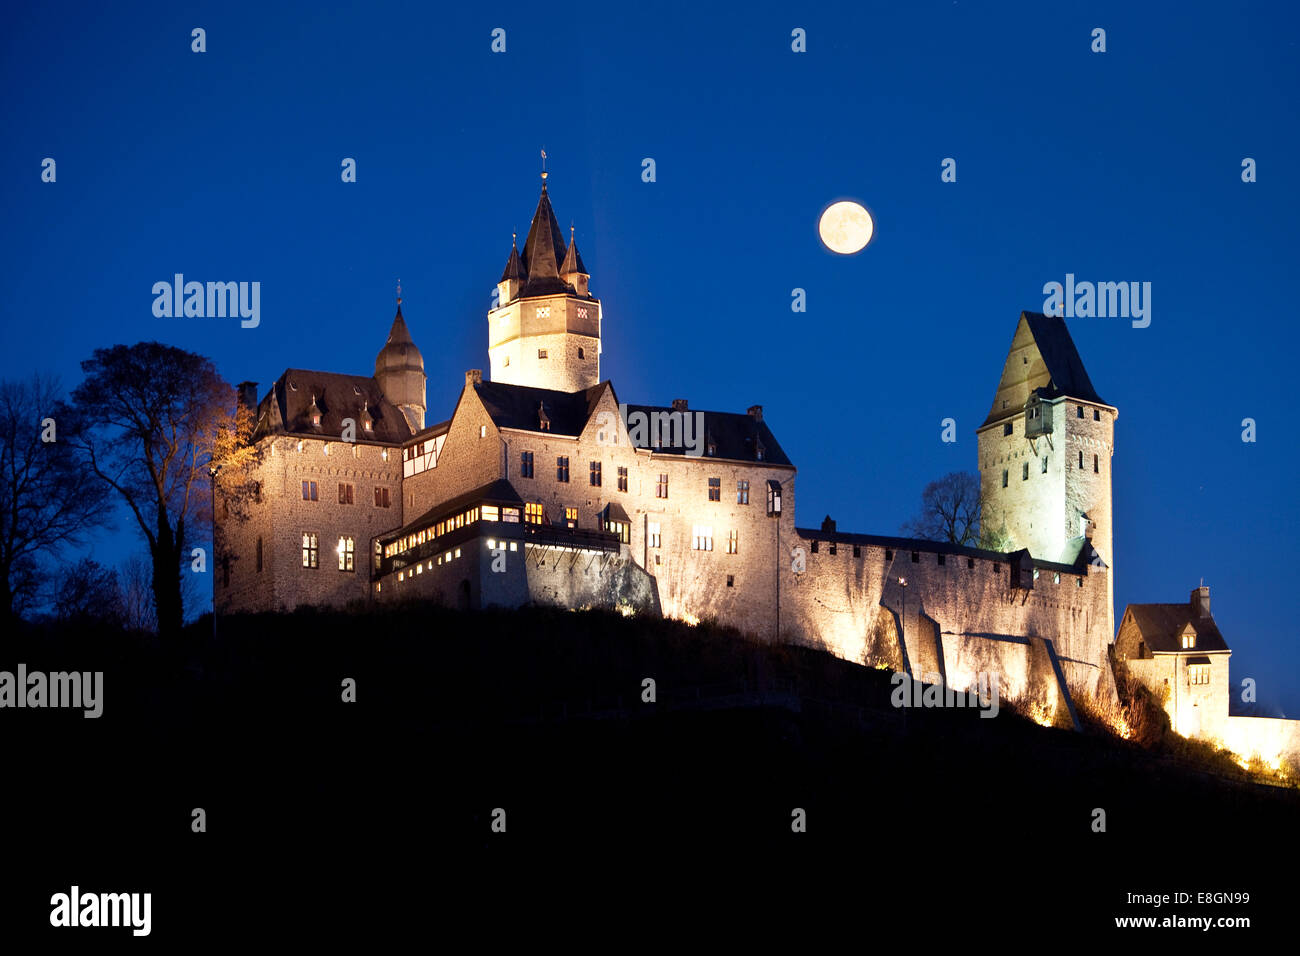 The illuminated Burg Altena Castle, with a full moon, Altena, Sauerland region, North Rhine-Westphalia, Germany Stock Photo